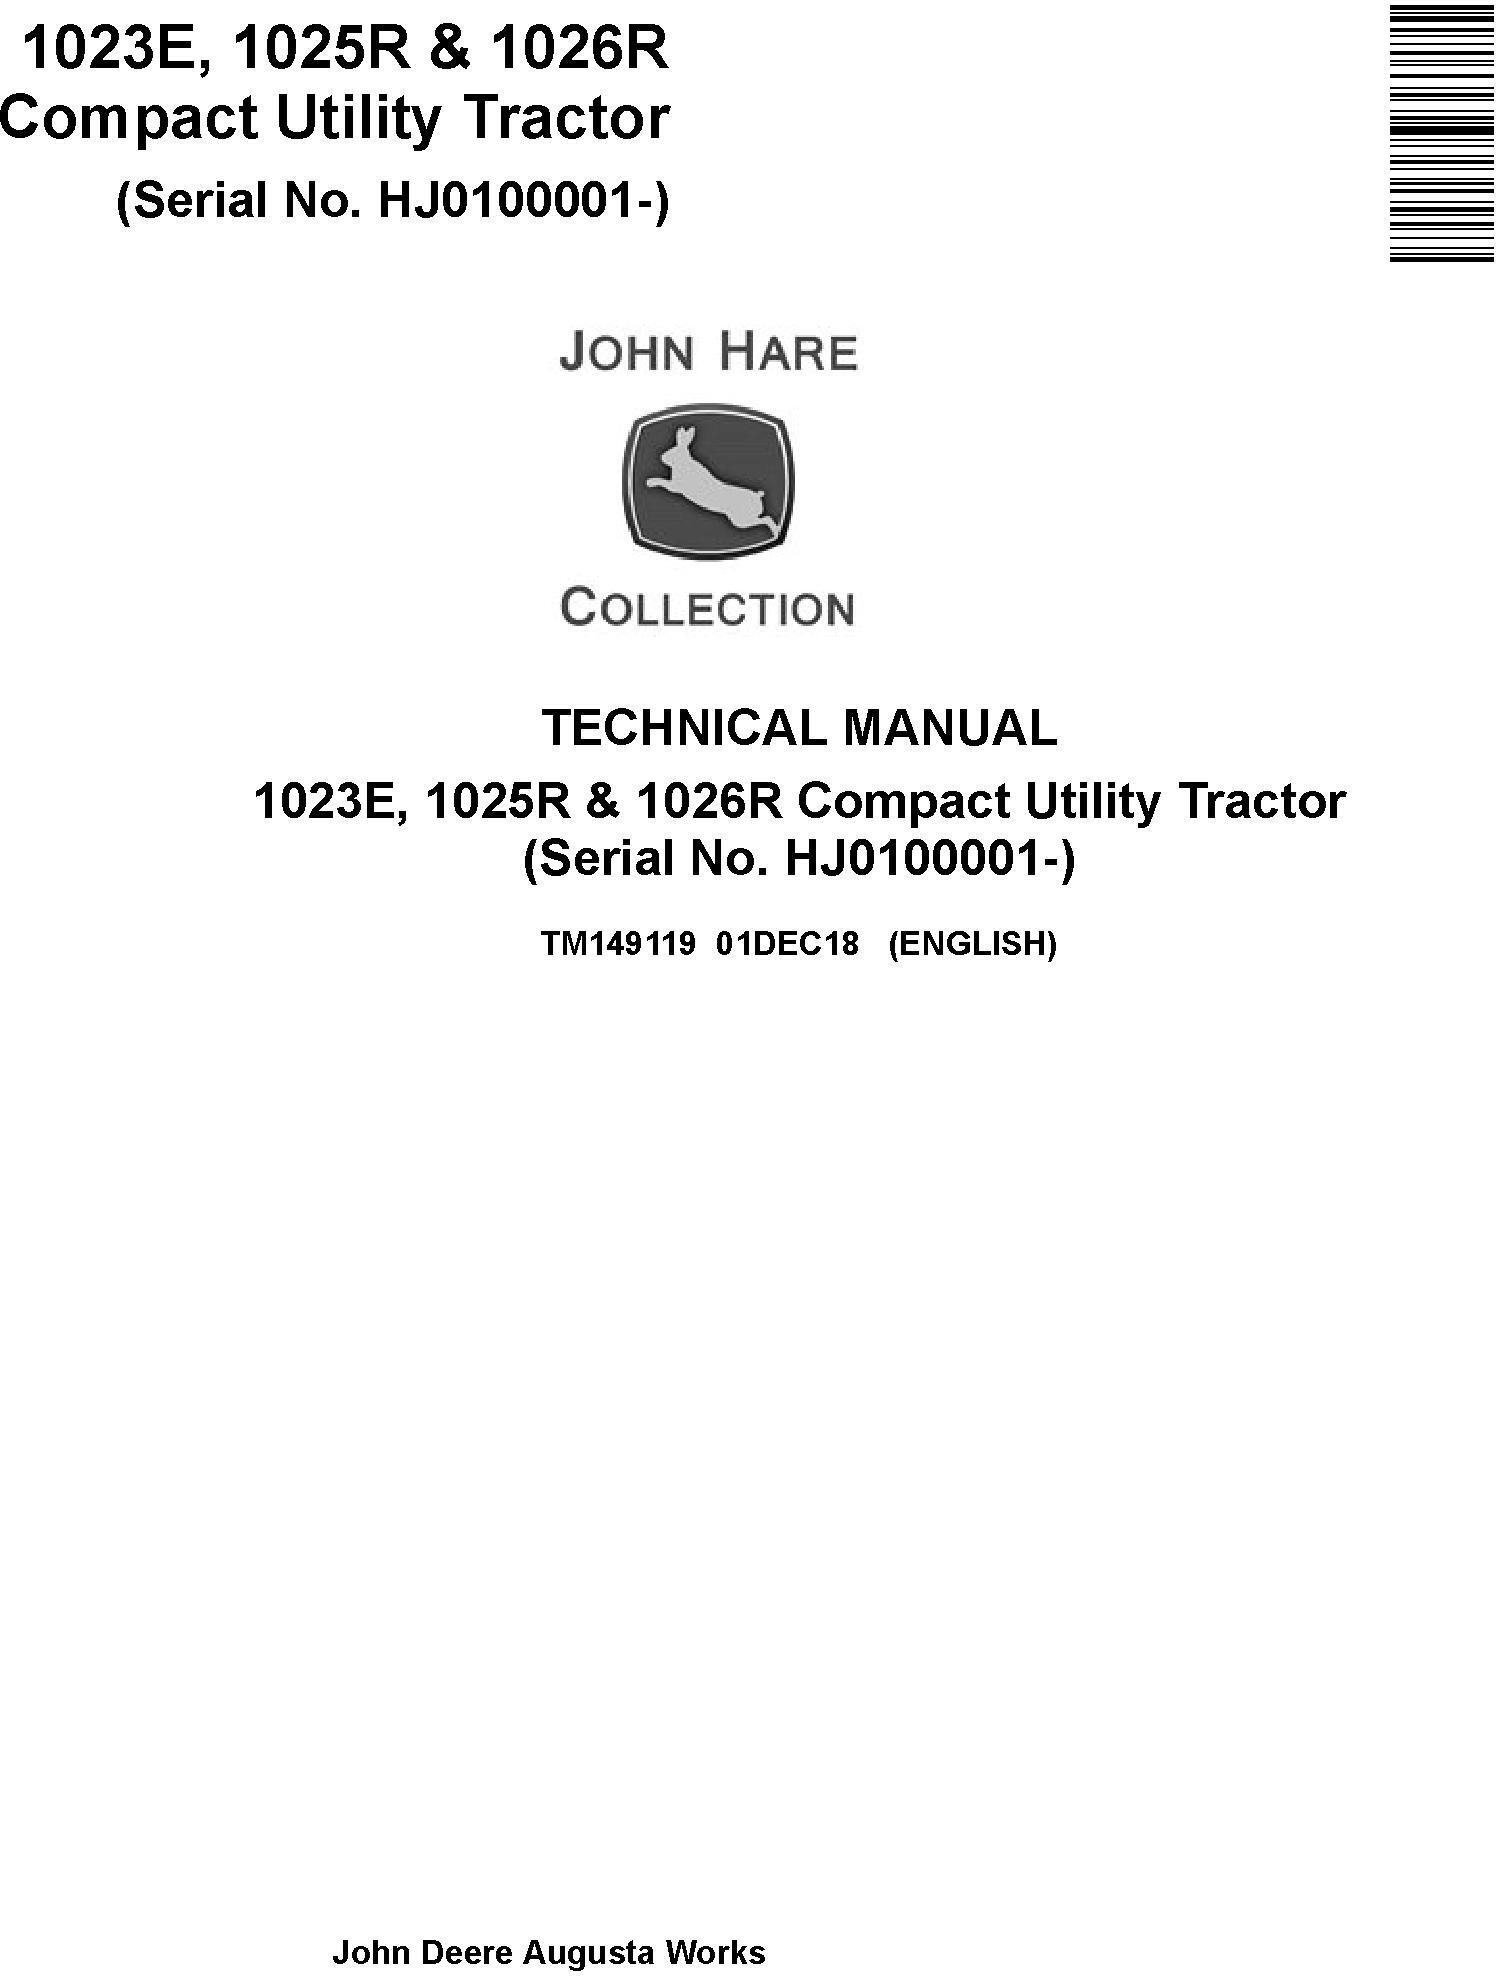 John Deere 1023E 1025R 1026R Compact Utility Tractor Technical Manual TM149119